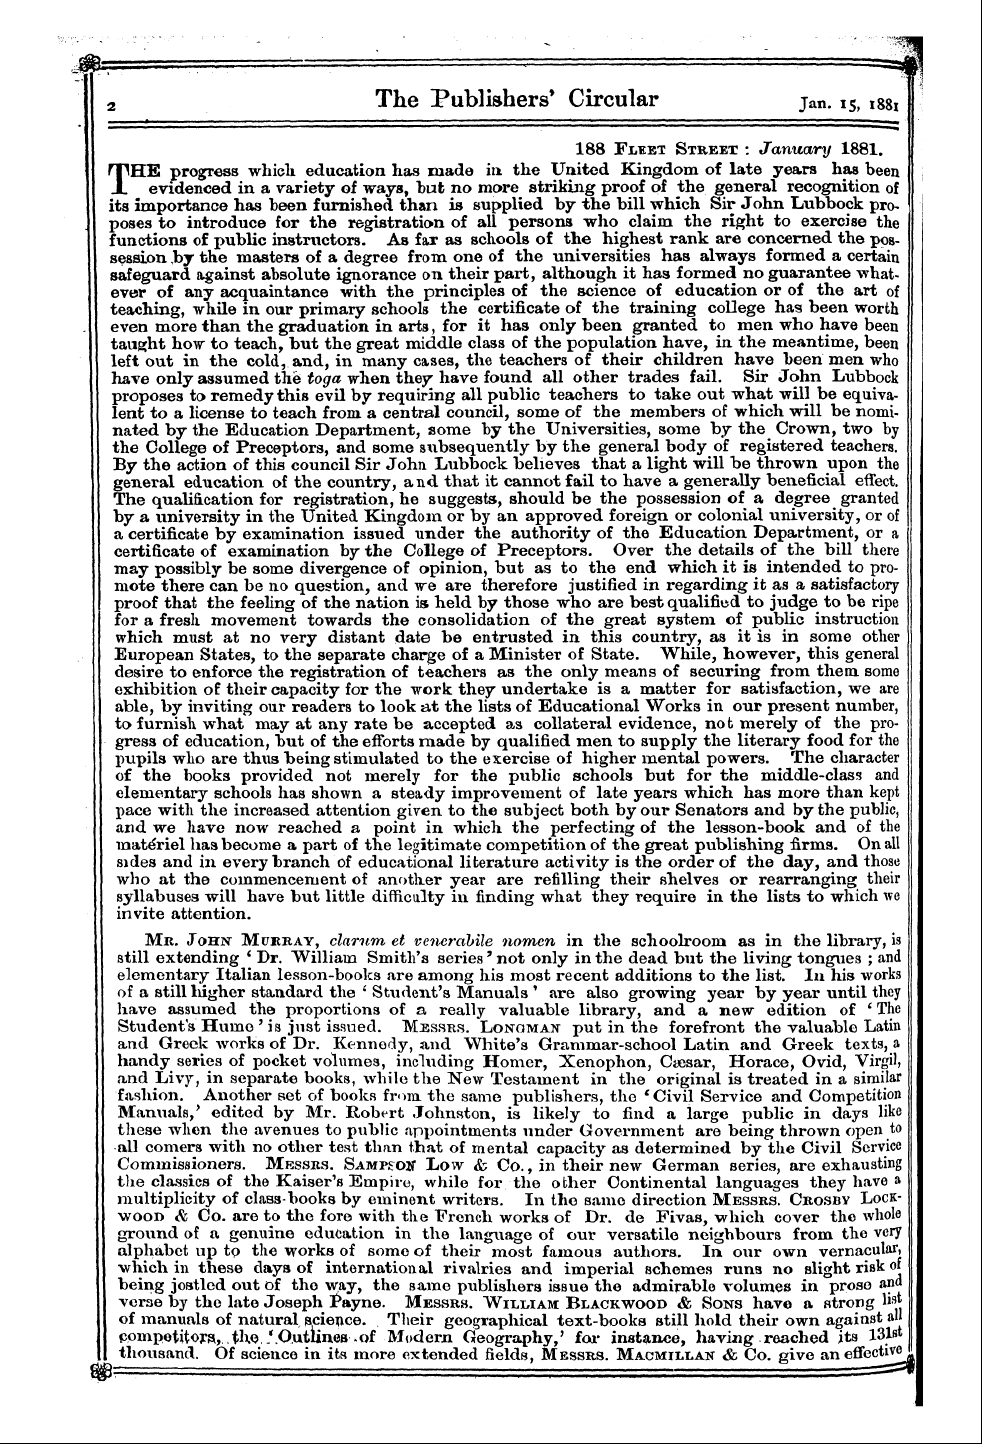 Publishers’ Circular (1880-1890): jS F Y, 1st edition - 188 Fleet Street : January 1881.